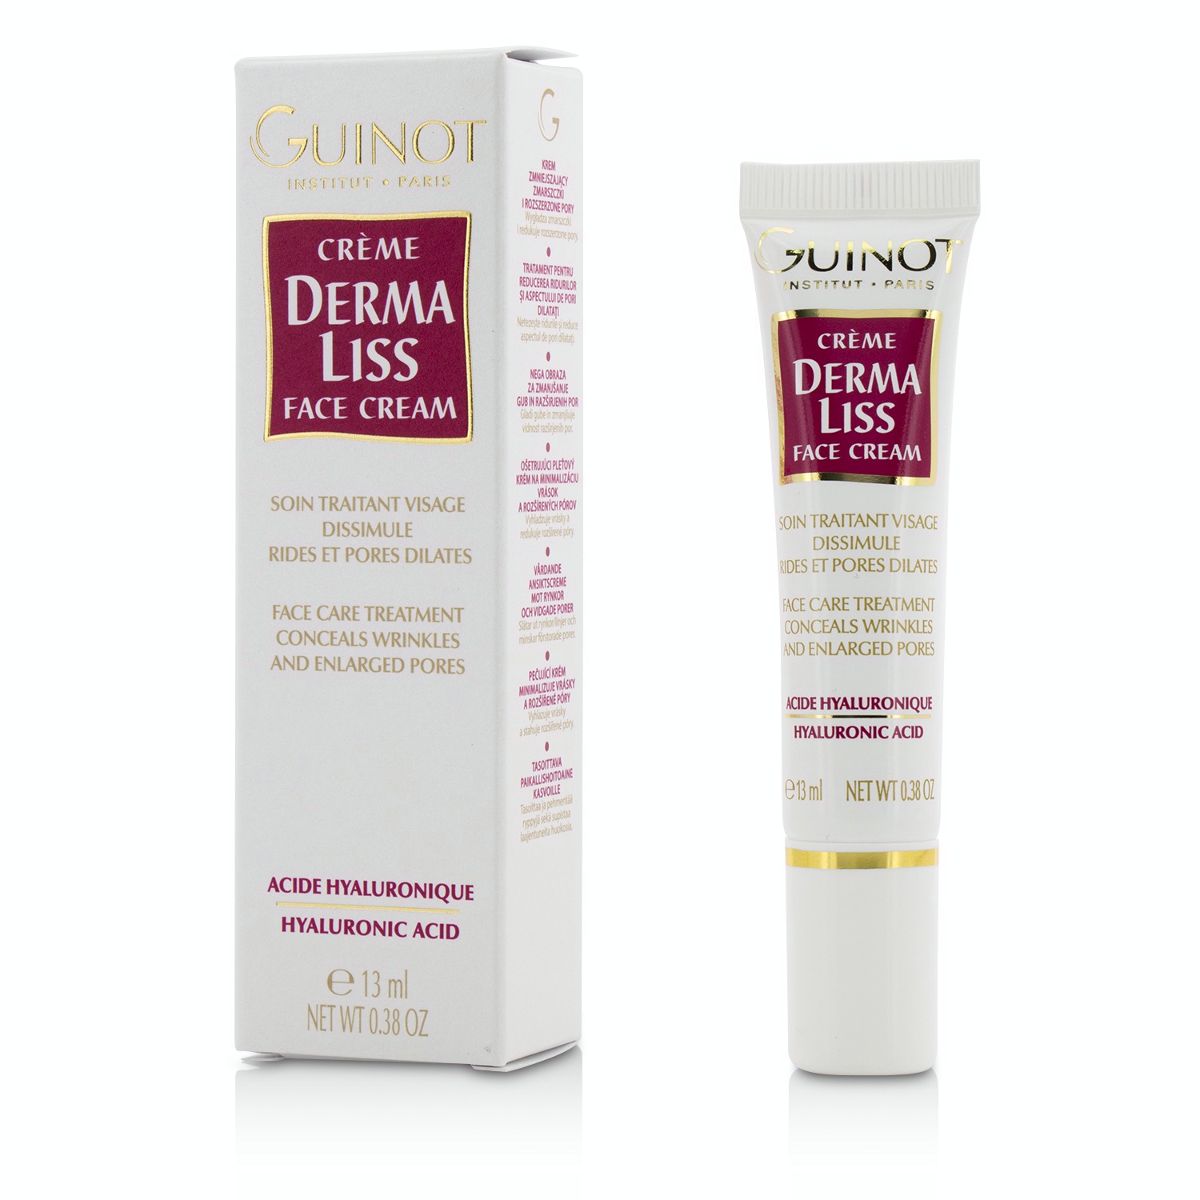 Creme Derma Liss Face Cream Guinot Image